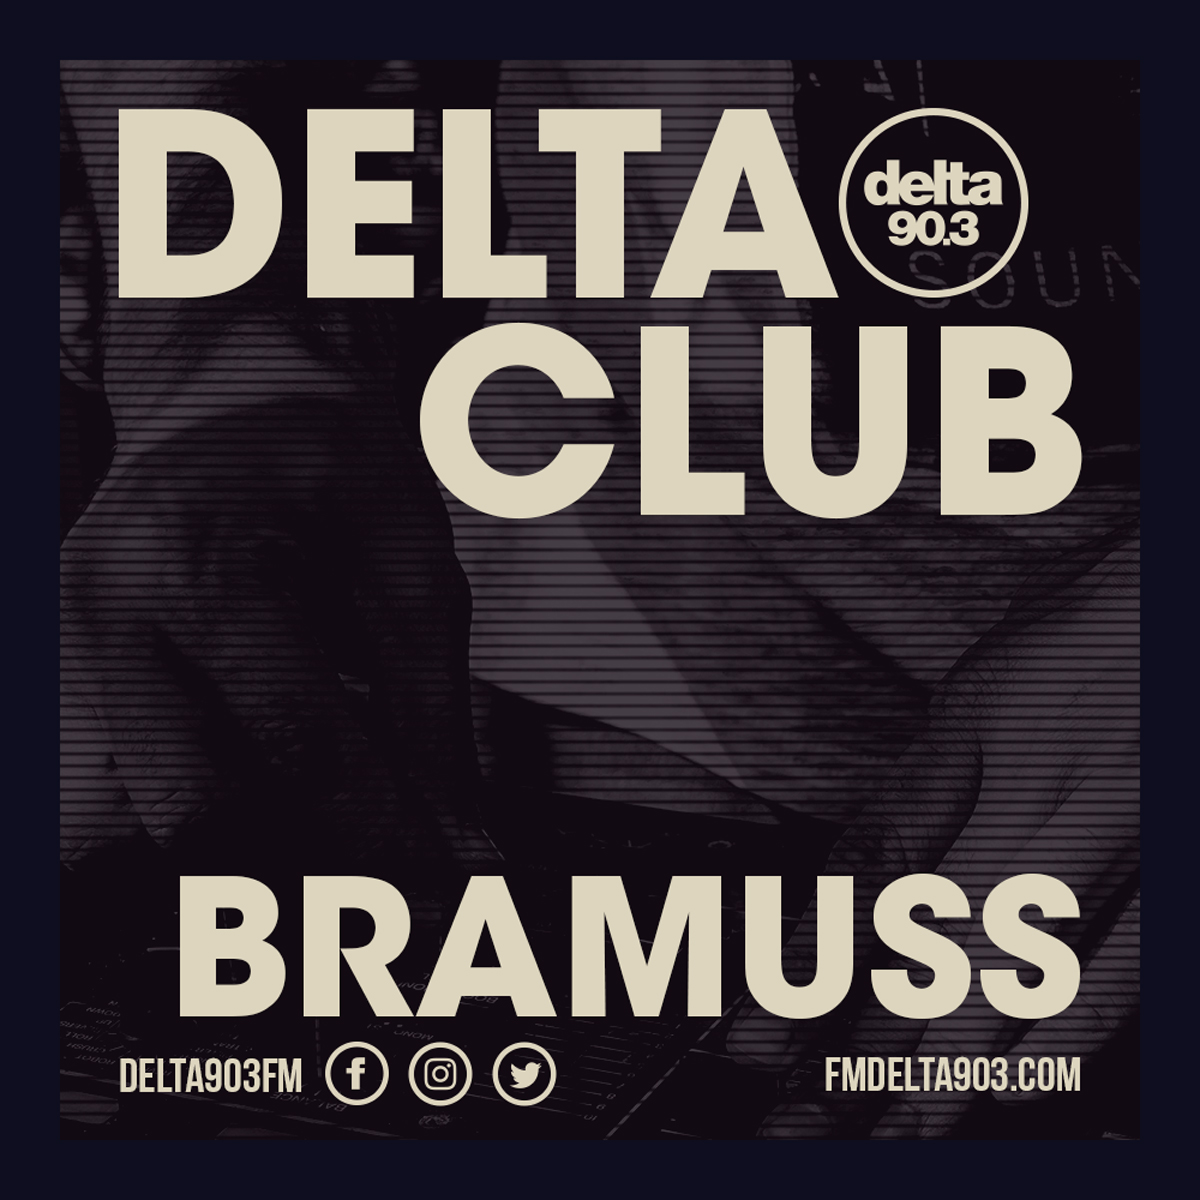 Delta Podcasts - Delta Club presents Bramuss (23.04.2018)